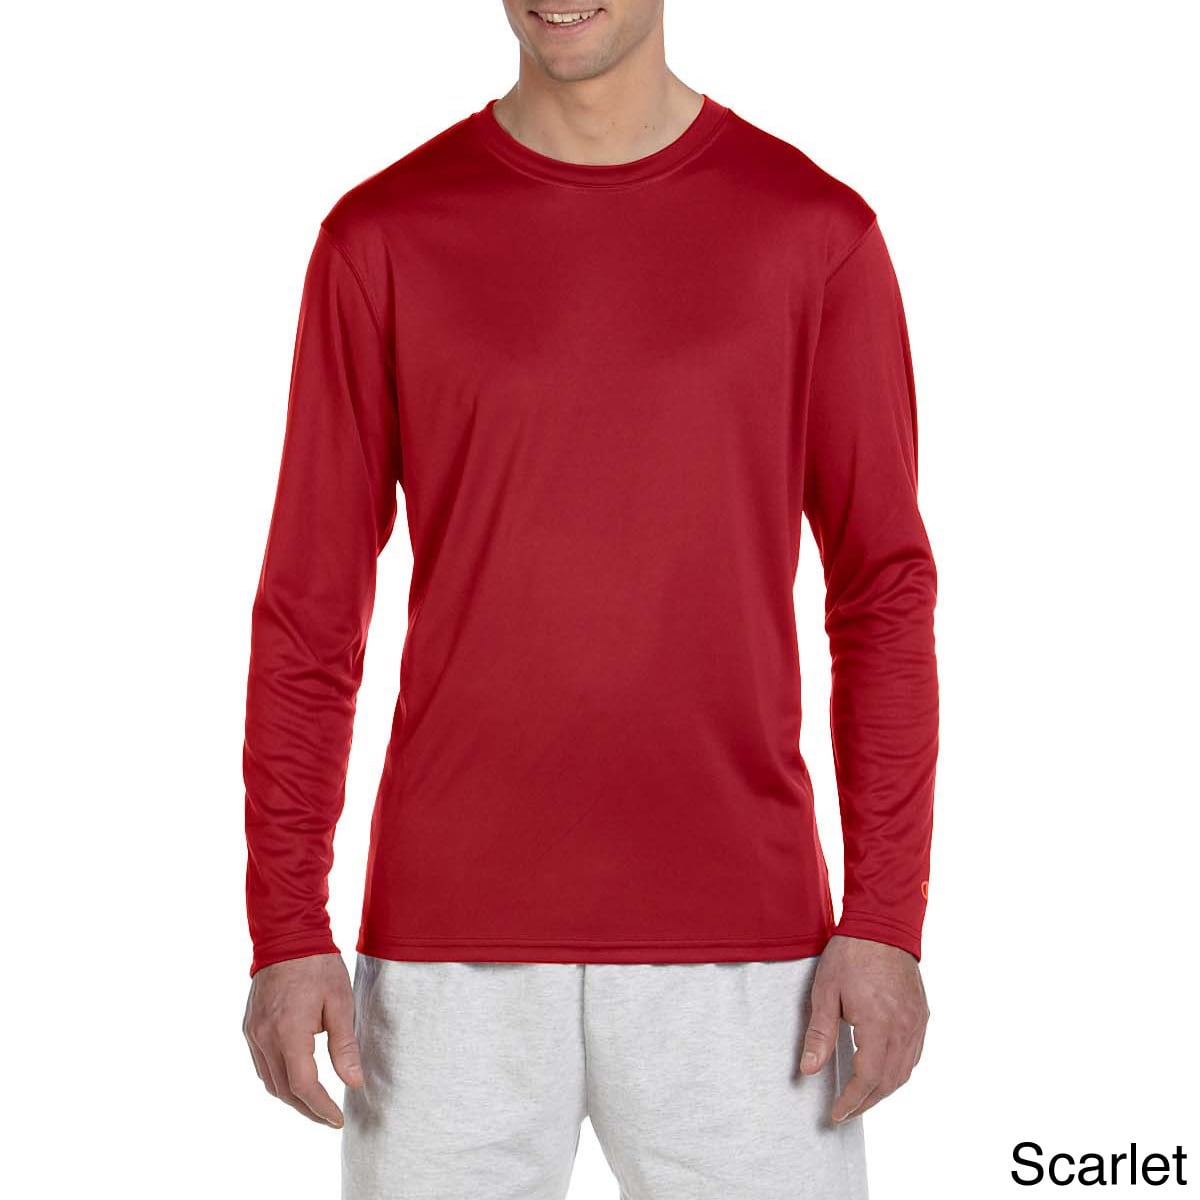 champion shirt long sleeve red